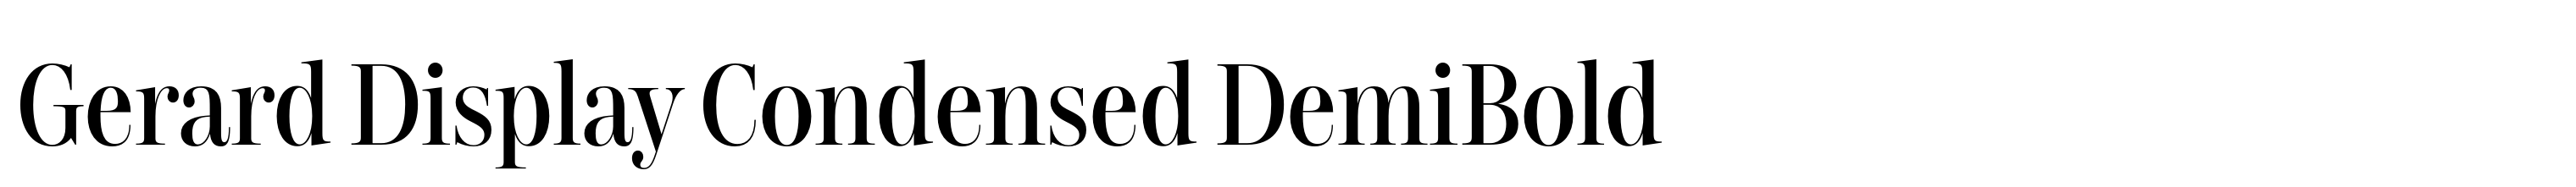 Gerard Display Condensed DemiBold